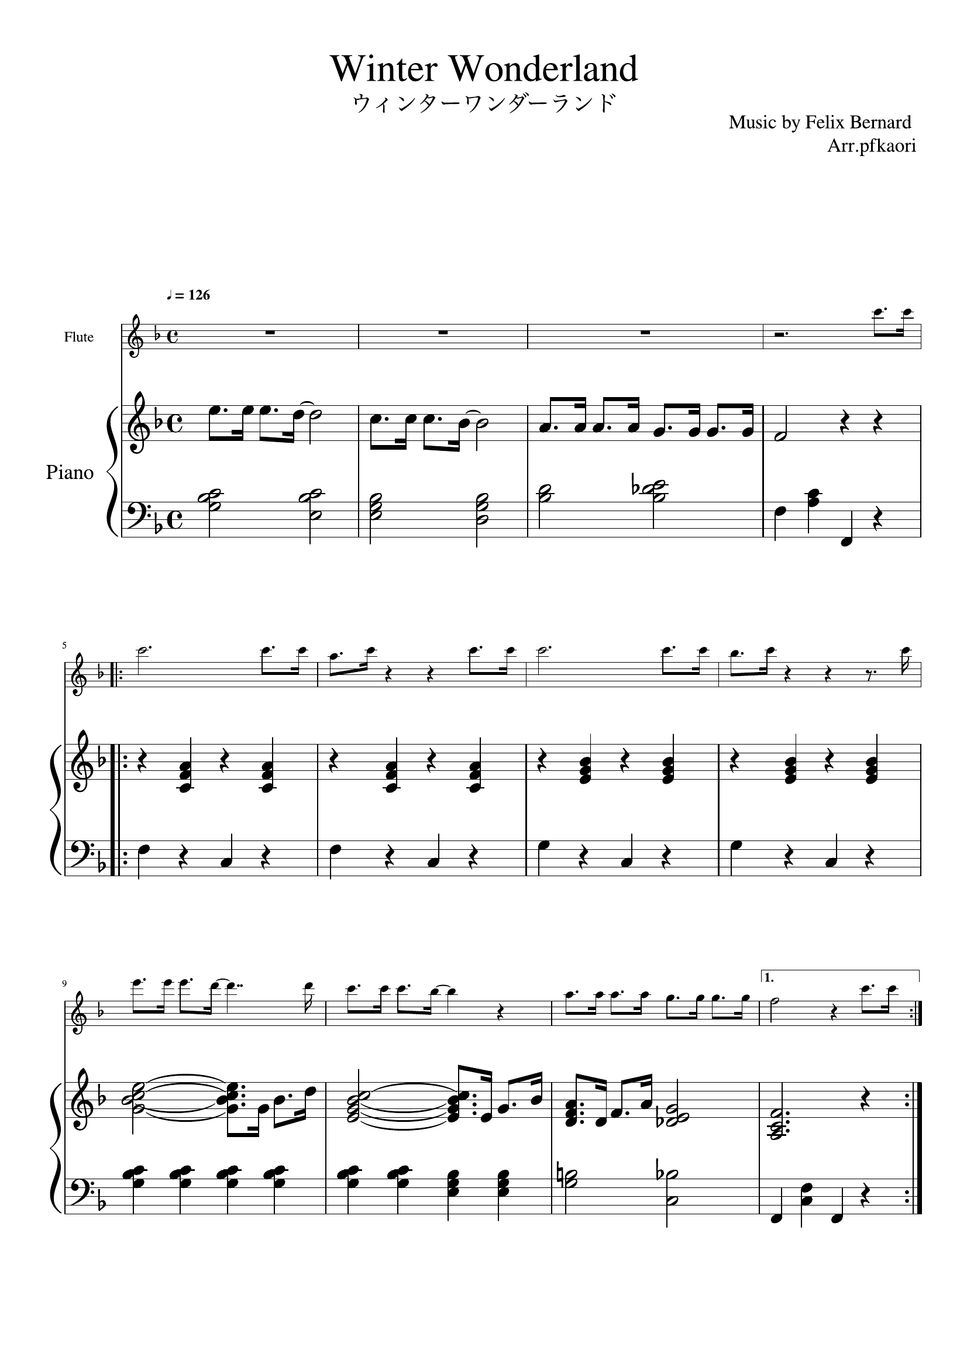 Felix Bernard - Winter Wonderland (Flute & Piano) by pfkaori